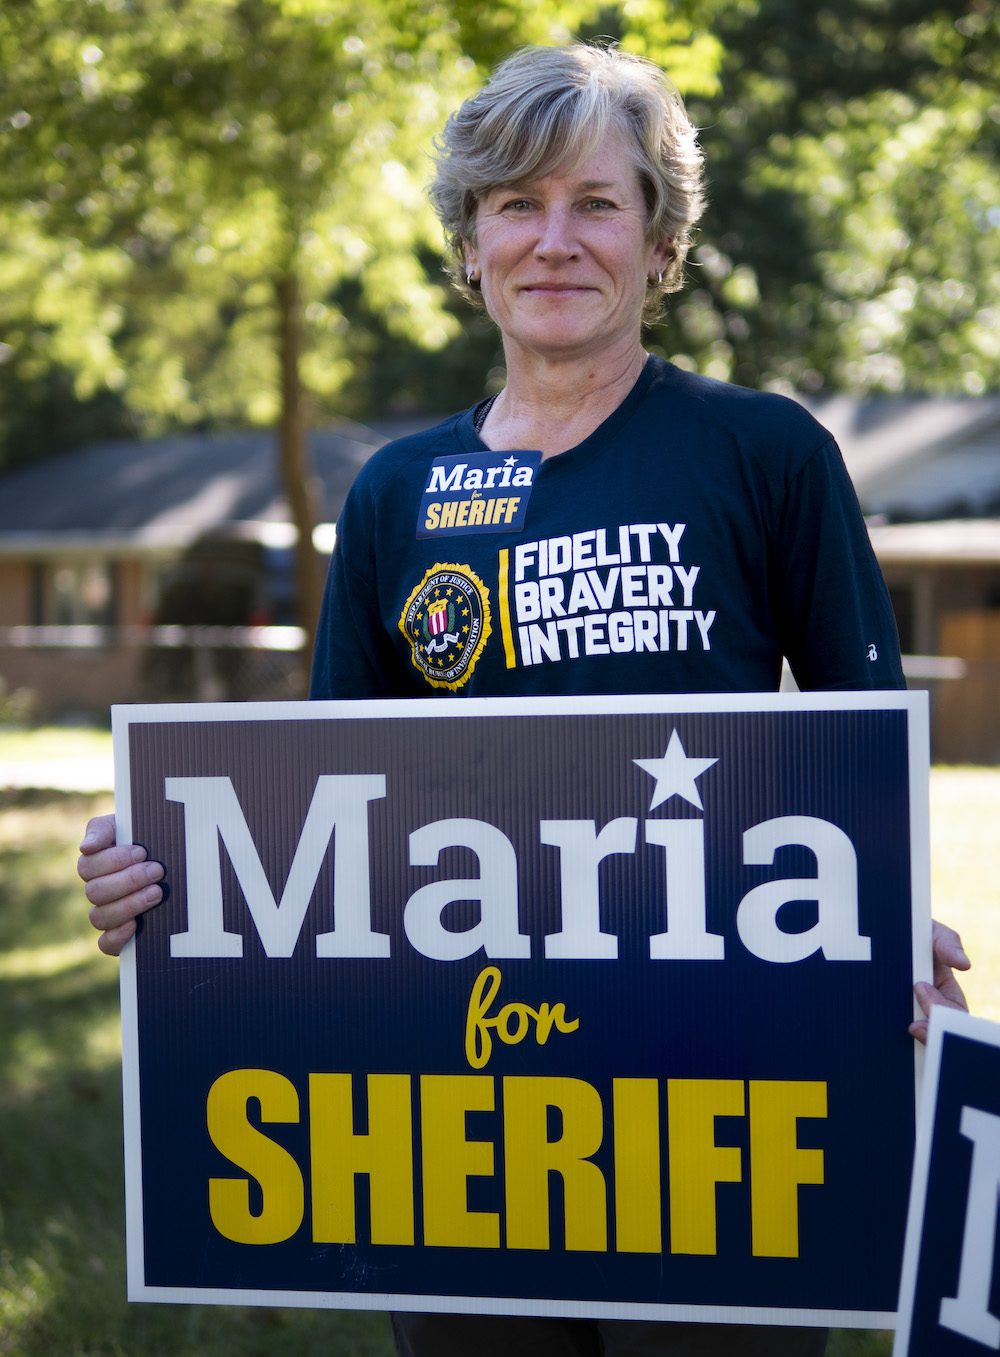 Maria sheriff